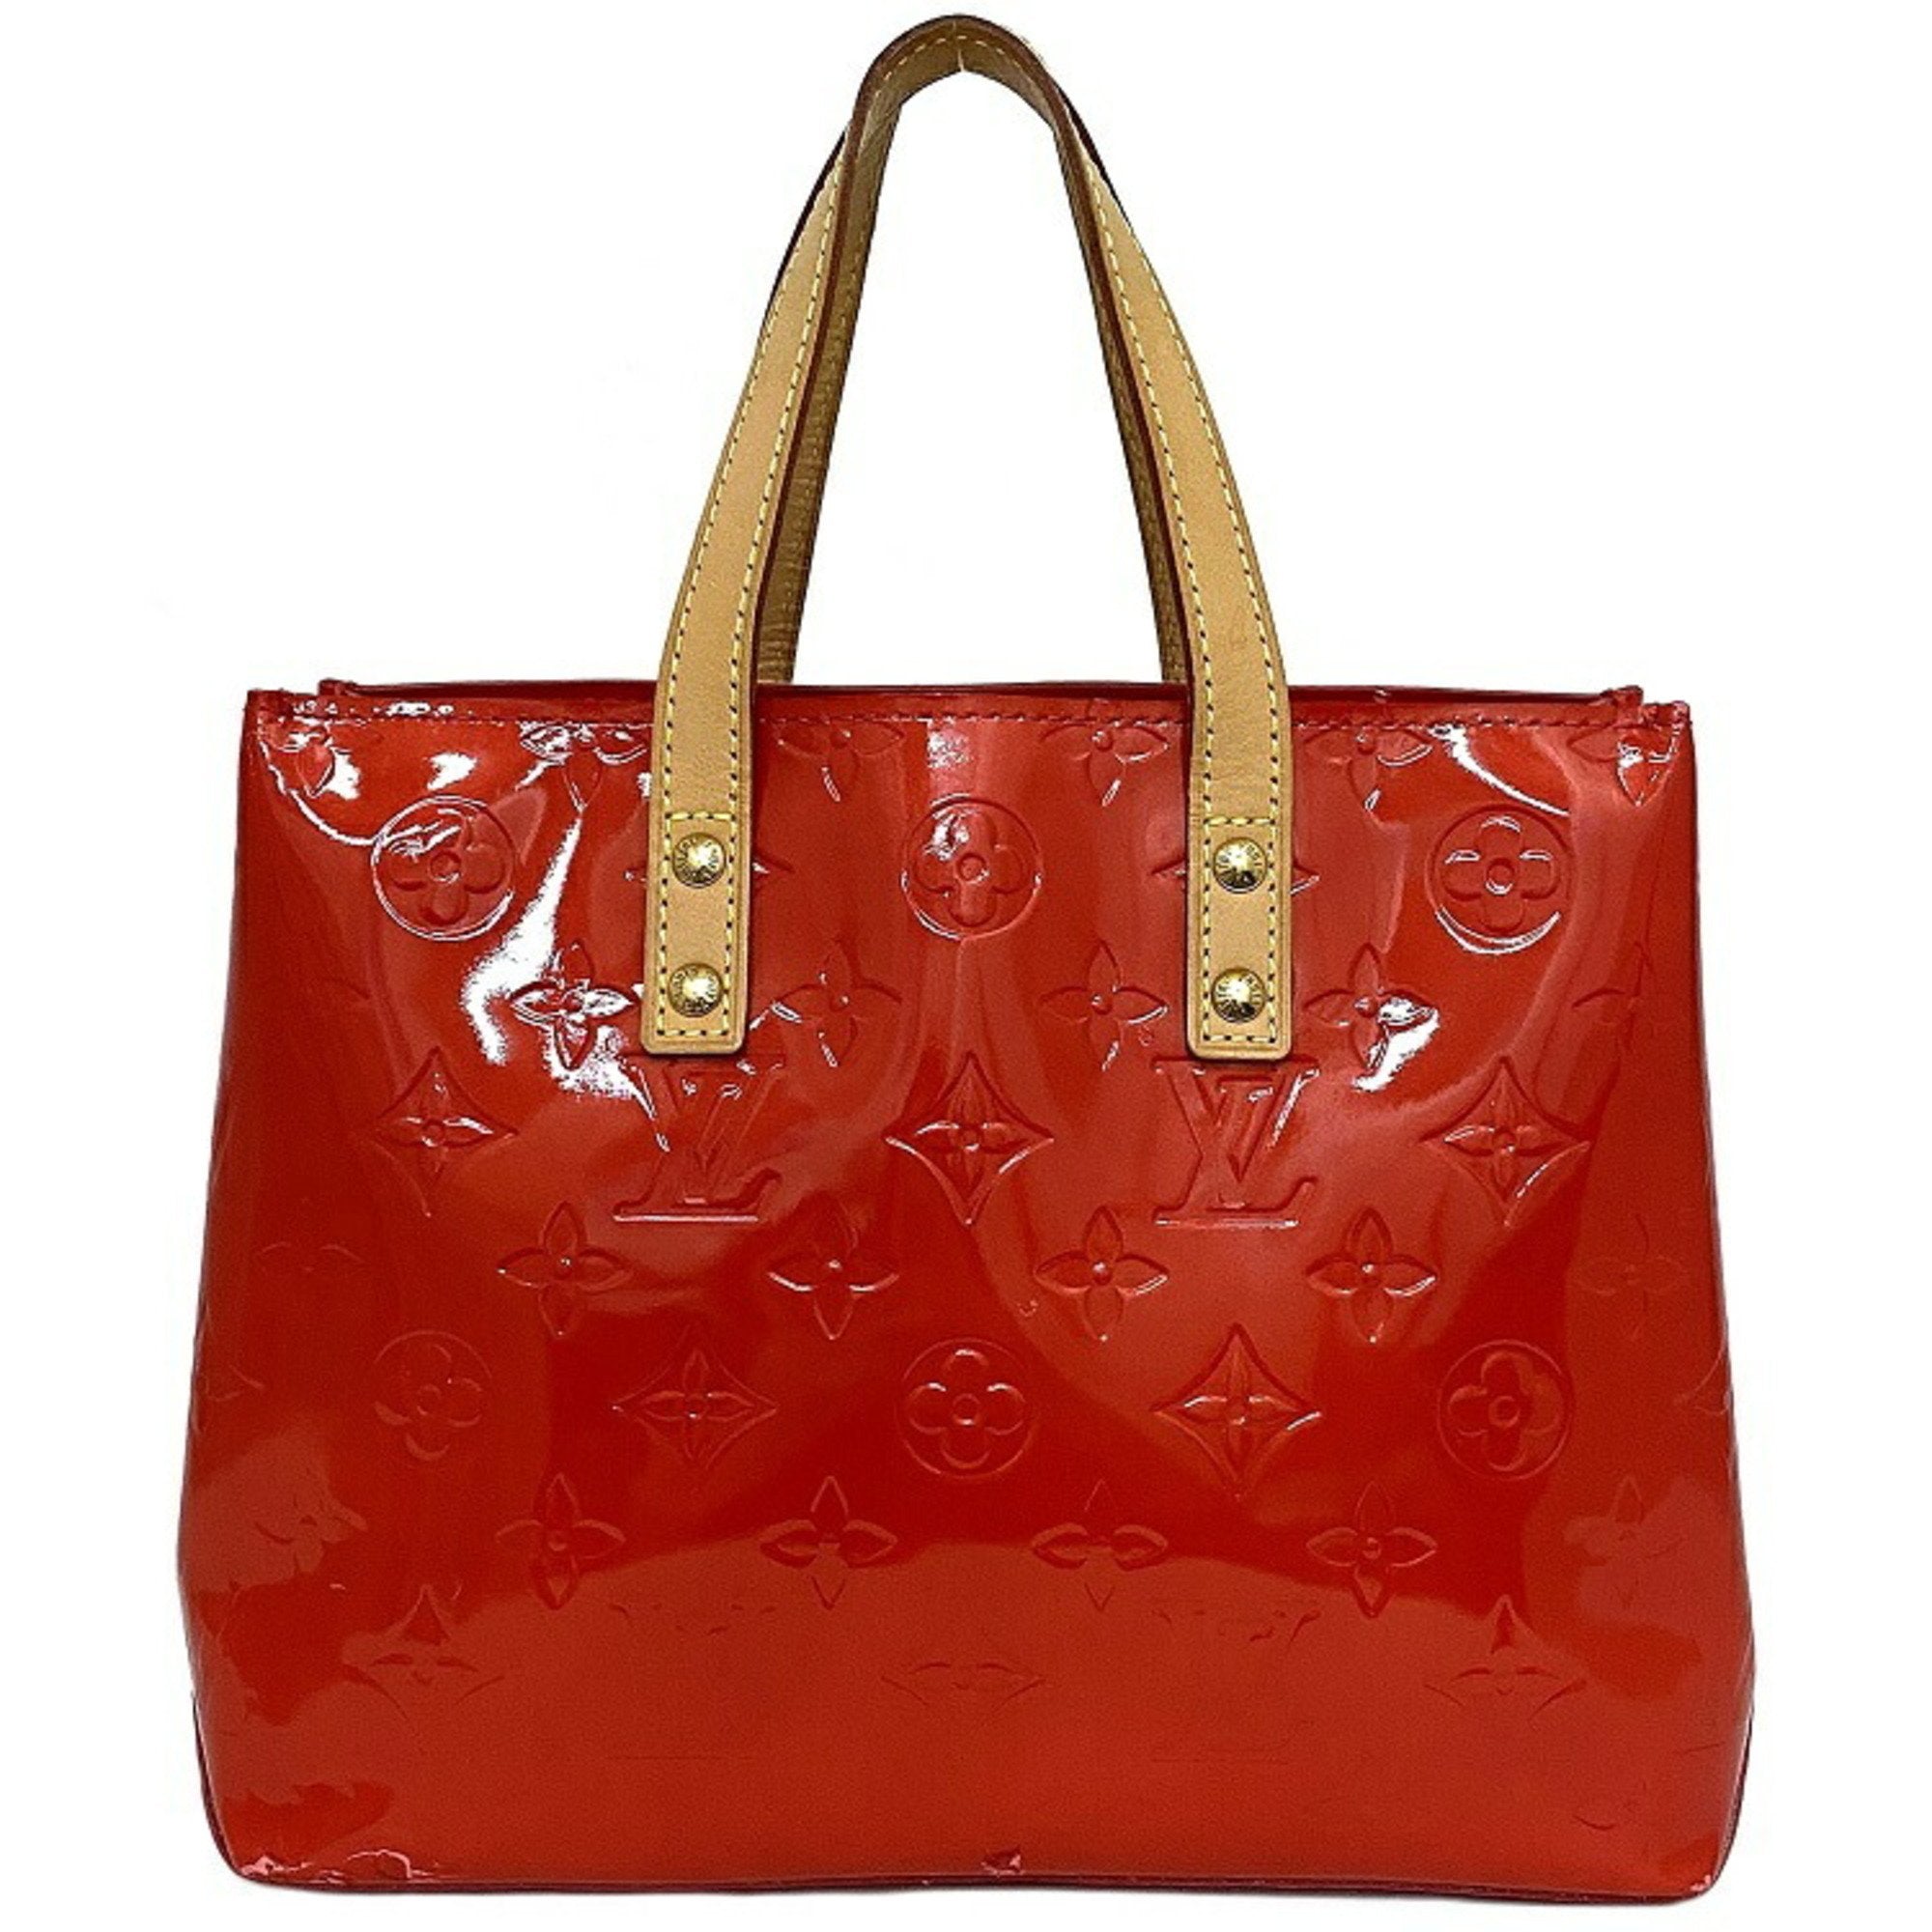 Louis Vuitton Monogram Vernis Lead PM Handbag M91144 Beige Patent